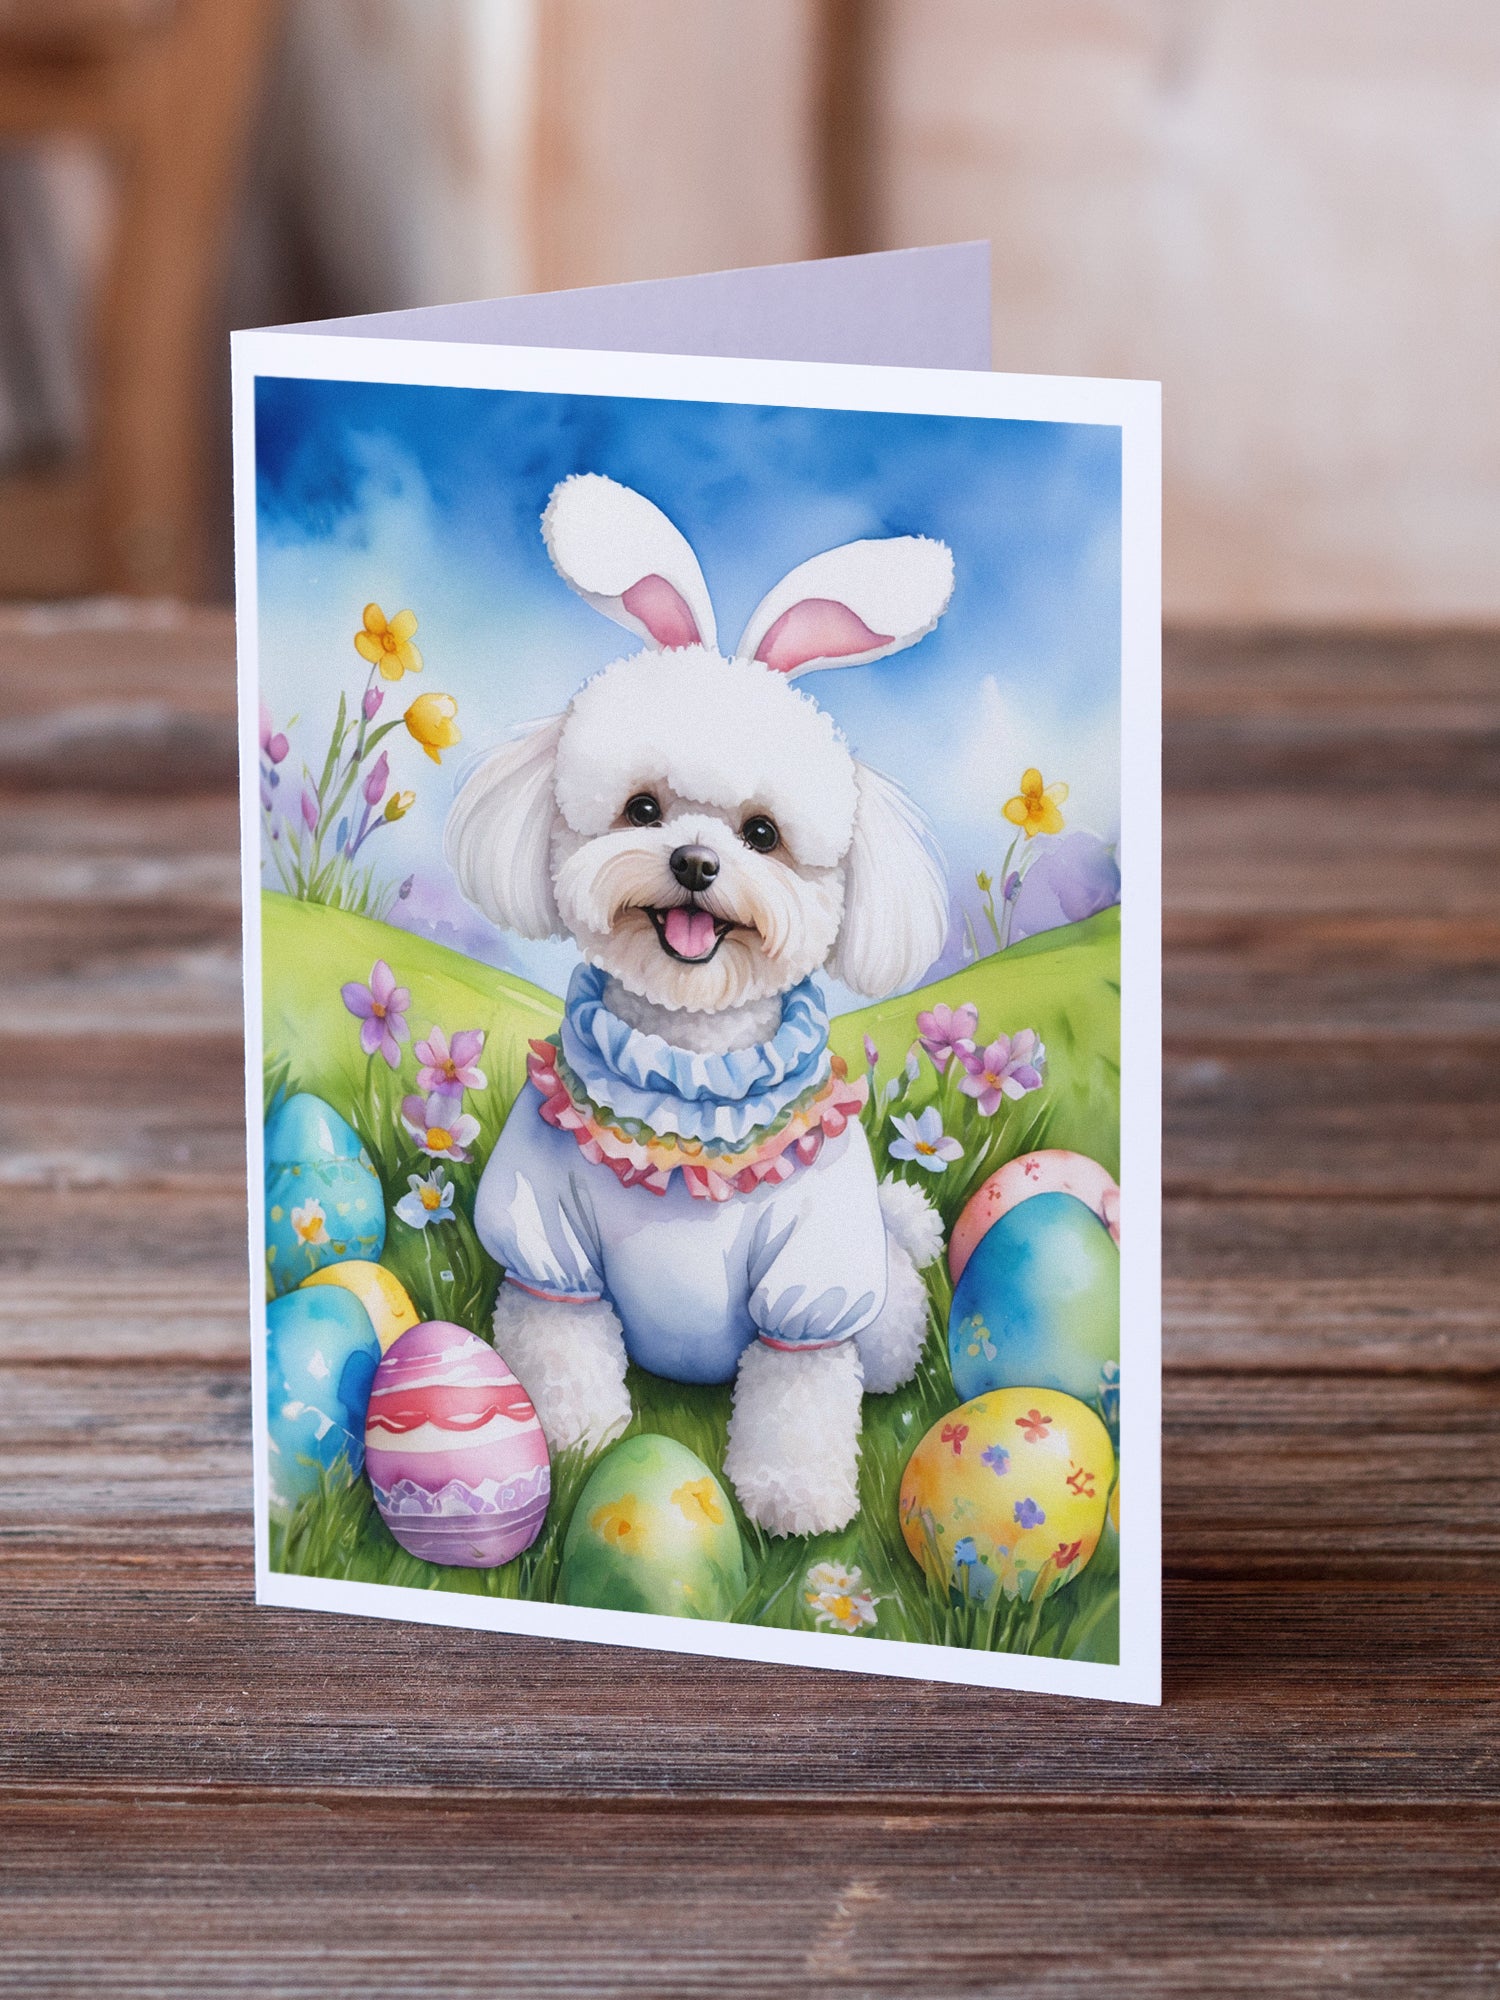 Bichon Frise Easter Egg Hunt Greeting Cards Pack of 8